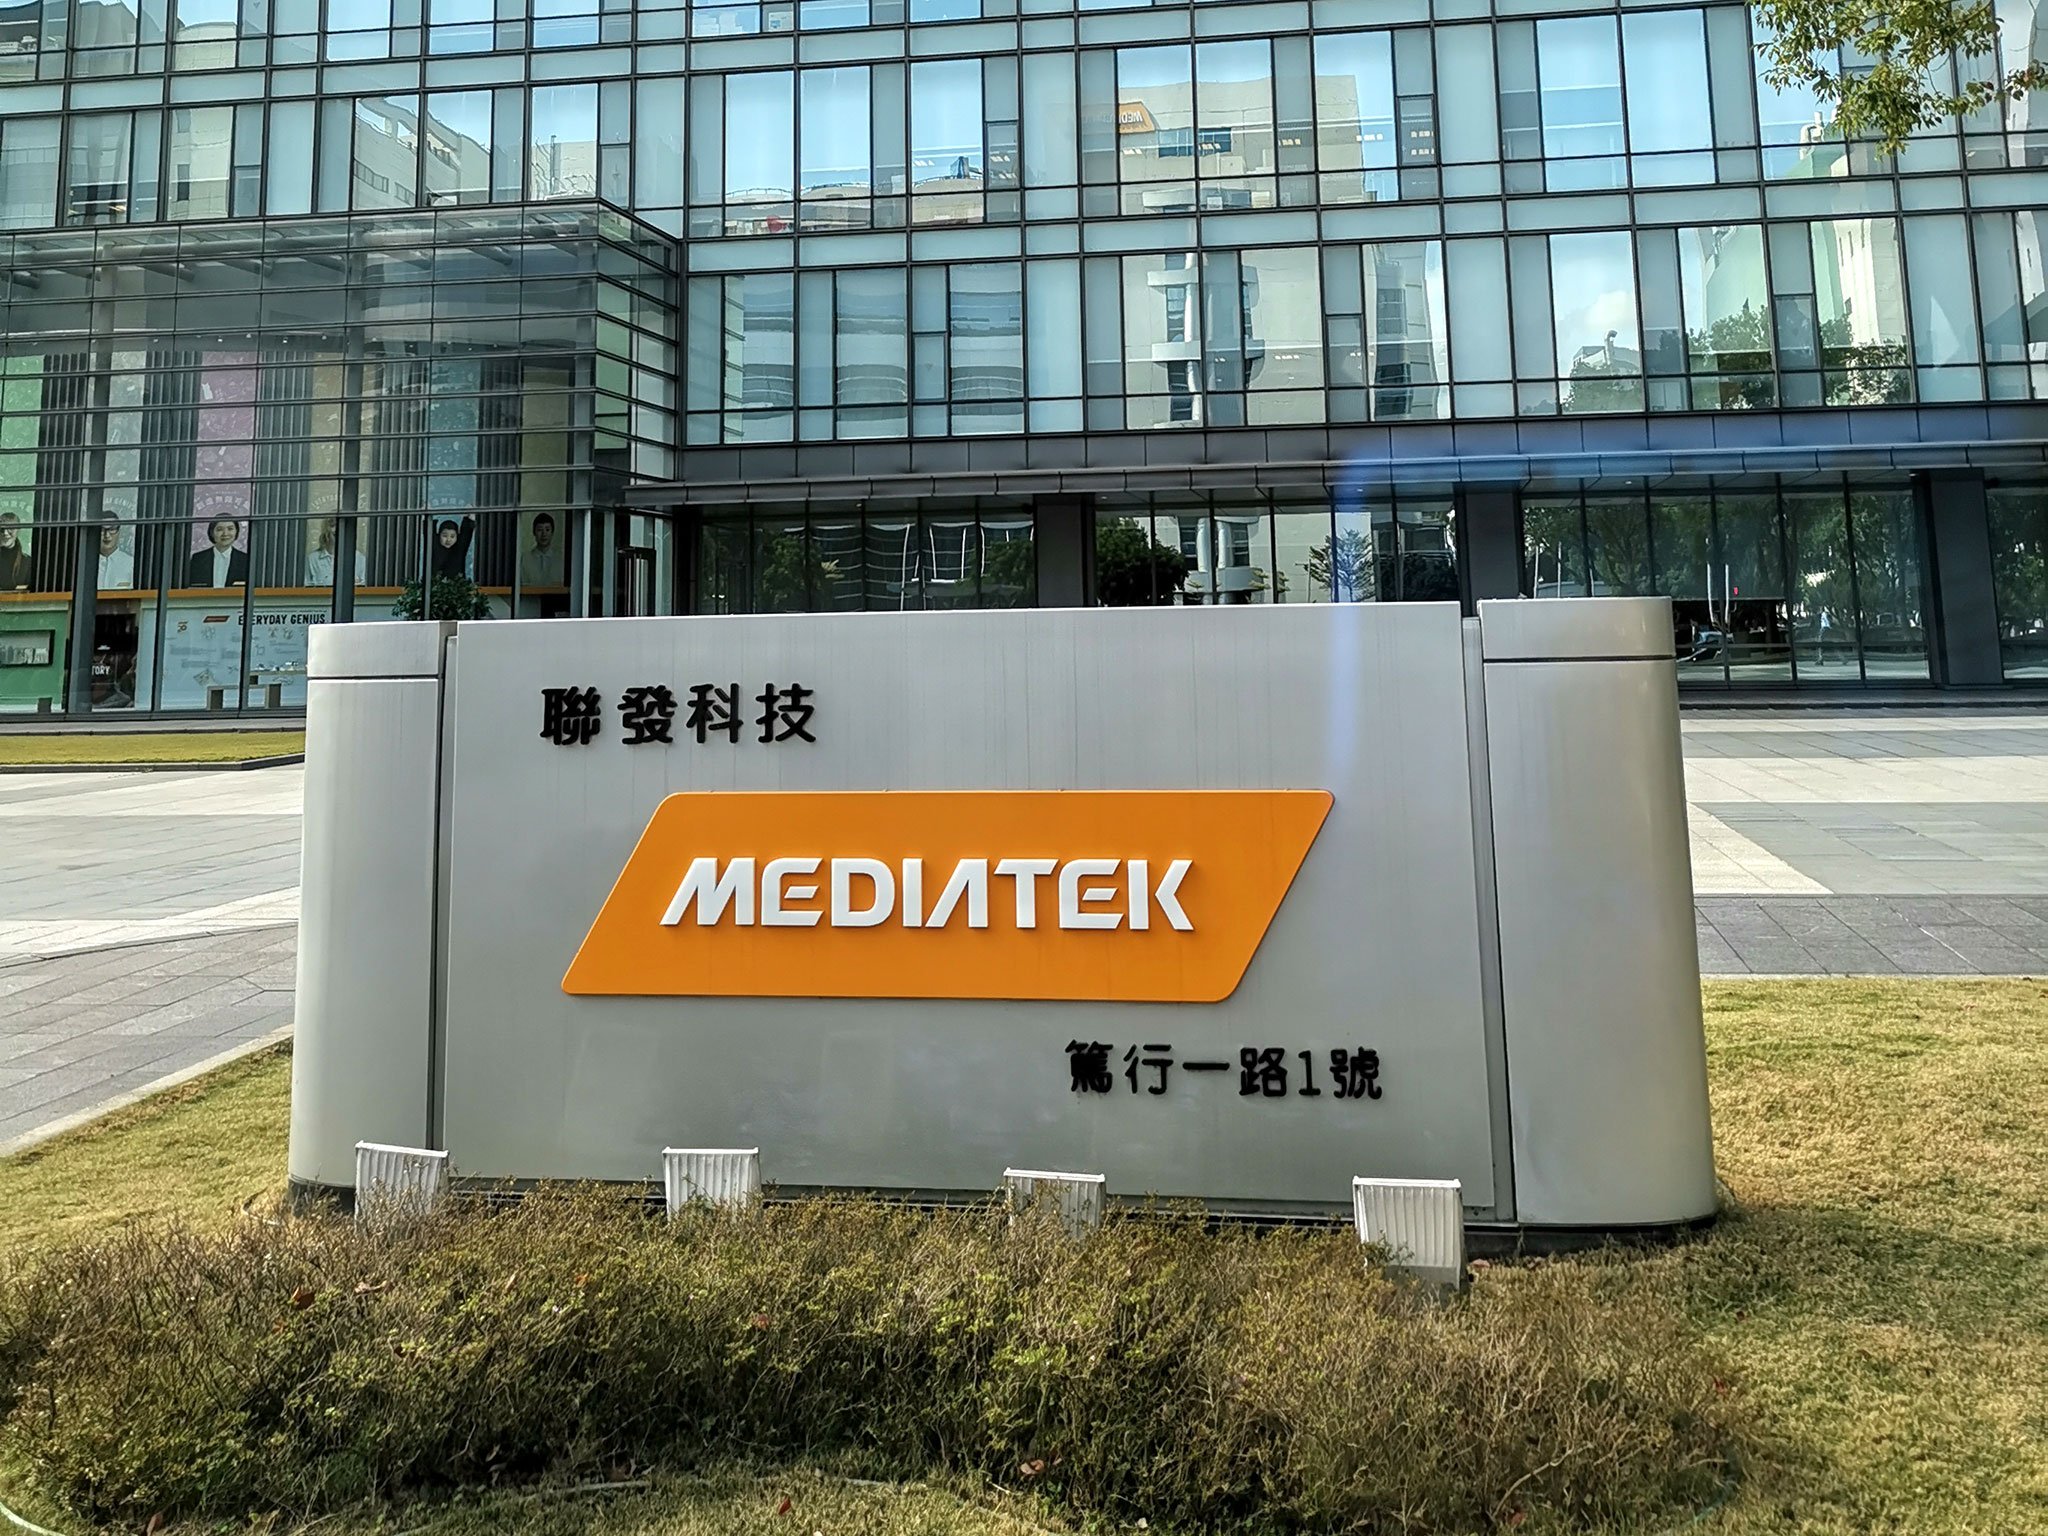 5G Wireless Technology - Mediatek Logo  next to a building